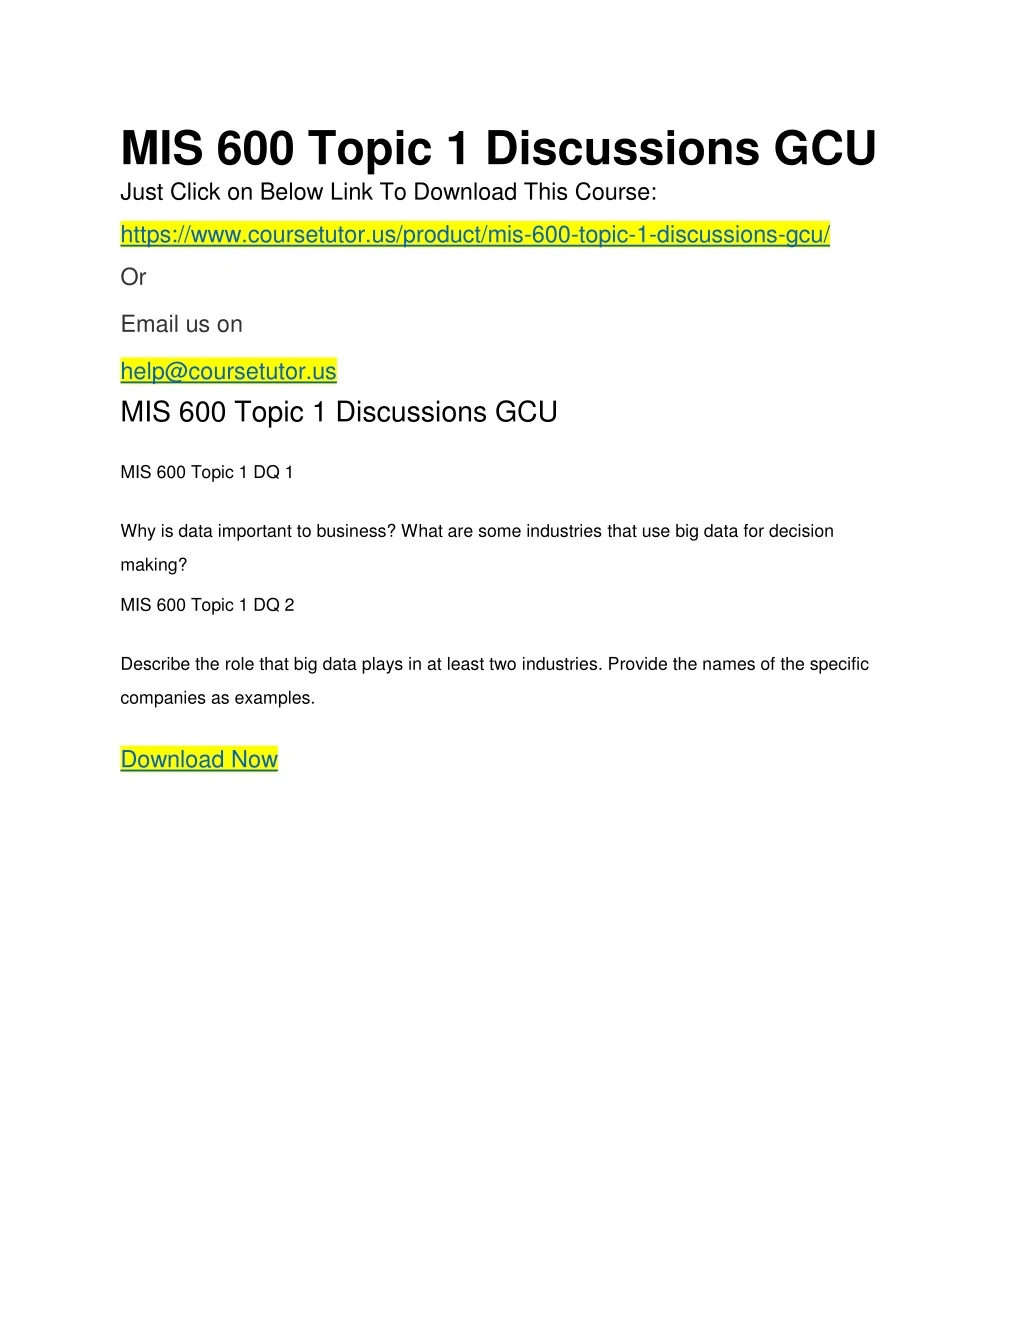 mis 600 topic 1 discussions gcu just click